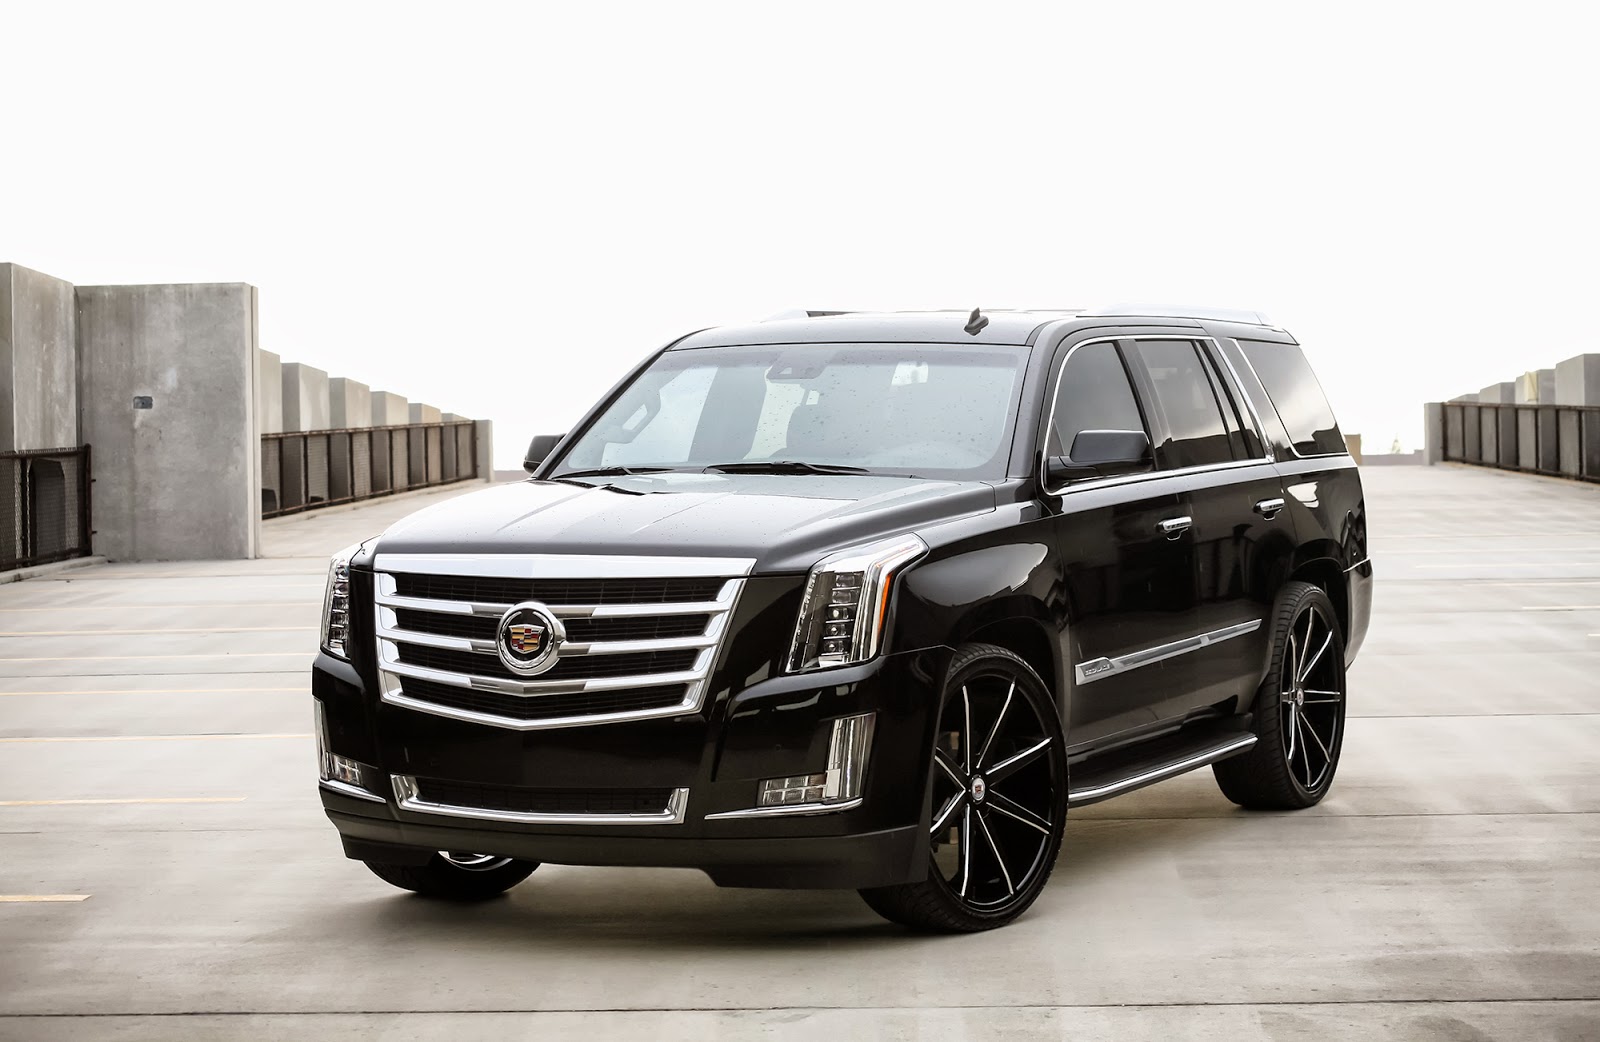 Cadillac 2015 escalade opening a new generation of luxury SUVs #11